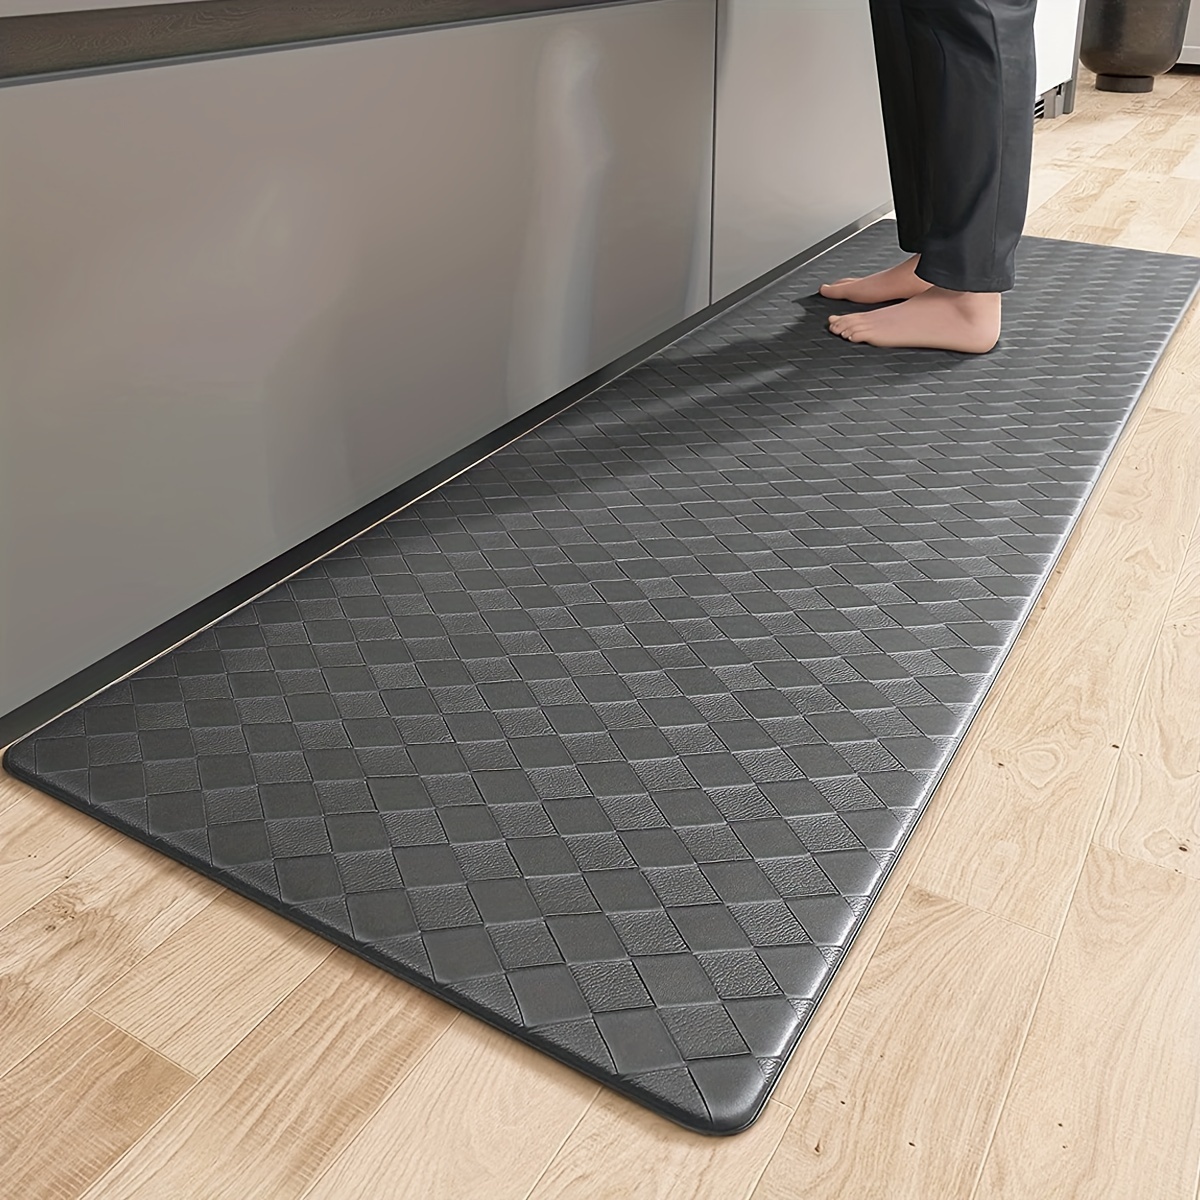 FEATOL Anti Fatigue Comfort Mat – Thick Non-Slip Bottom Kitchen